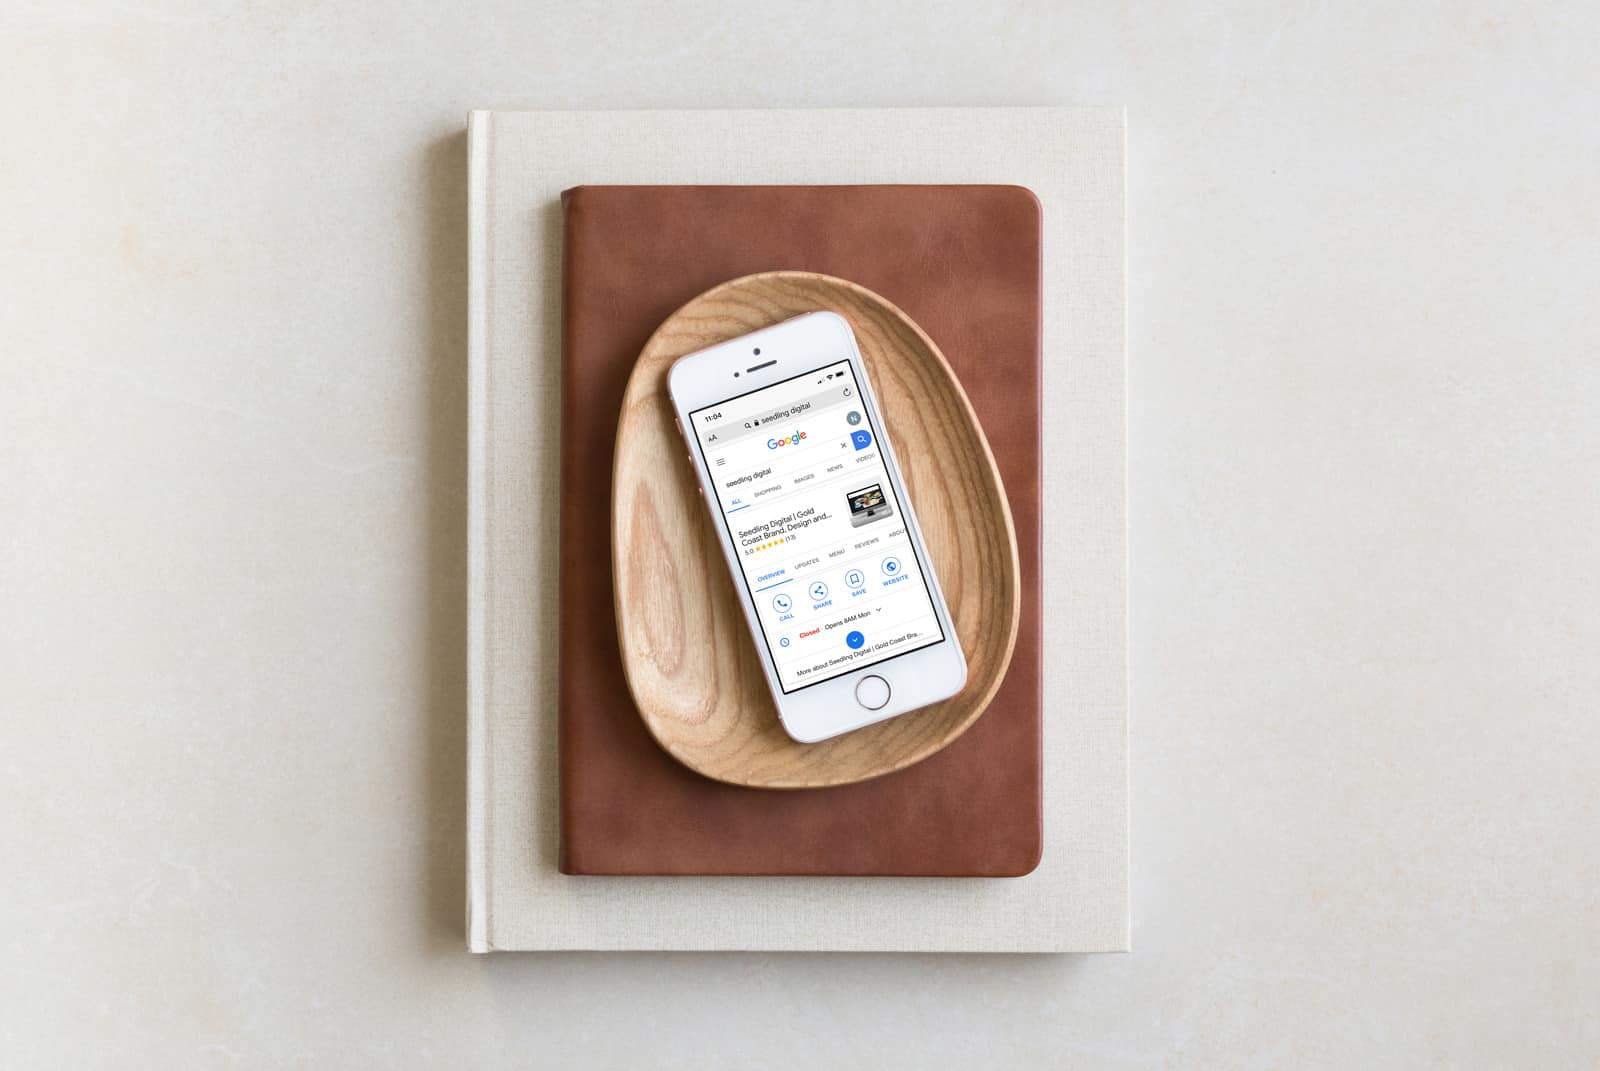 A WordPress website developer in Australia created a design featuring an iPhone on a wooden plate.